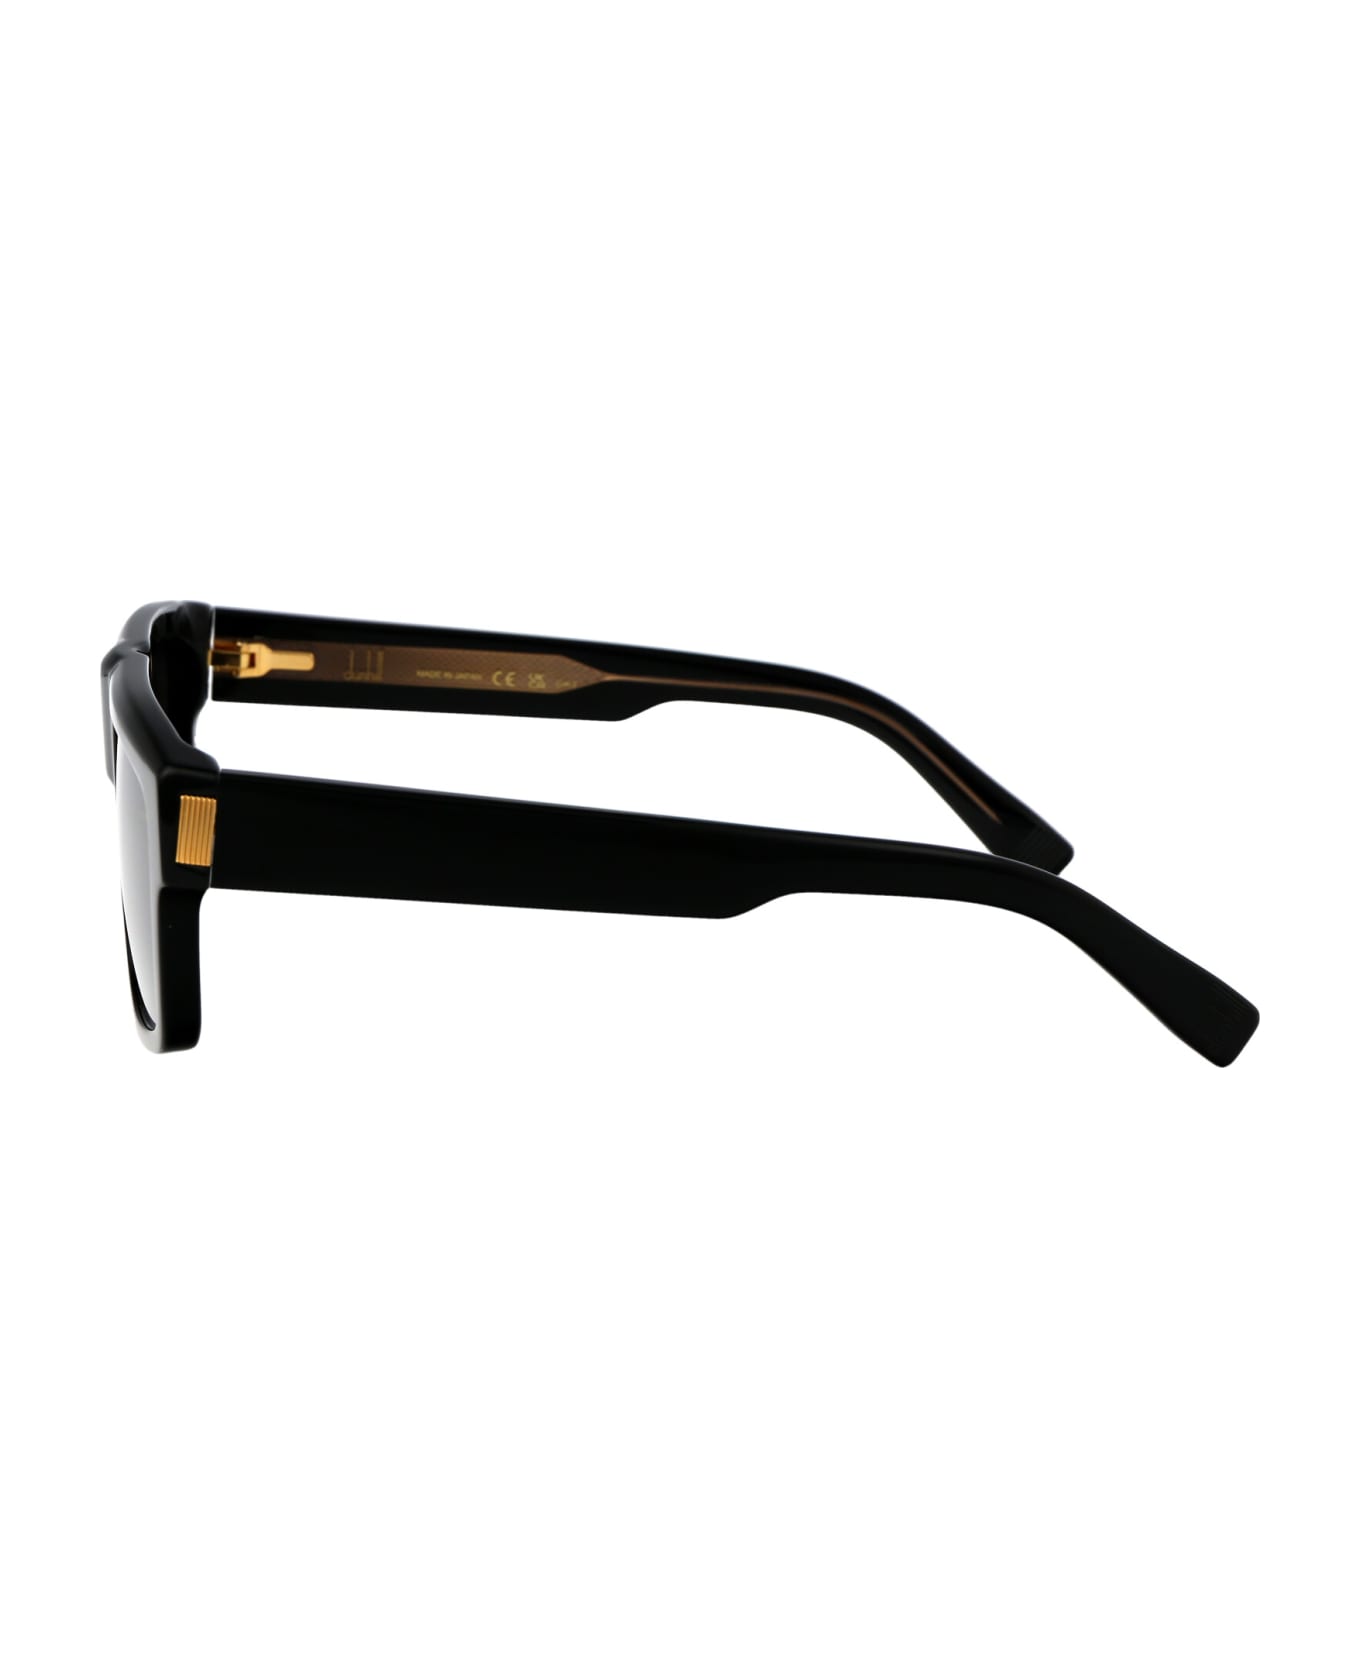 Dunhill Du0055s Sunglasses - 001 BLACK BLACK GREY